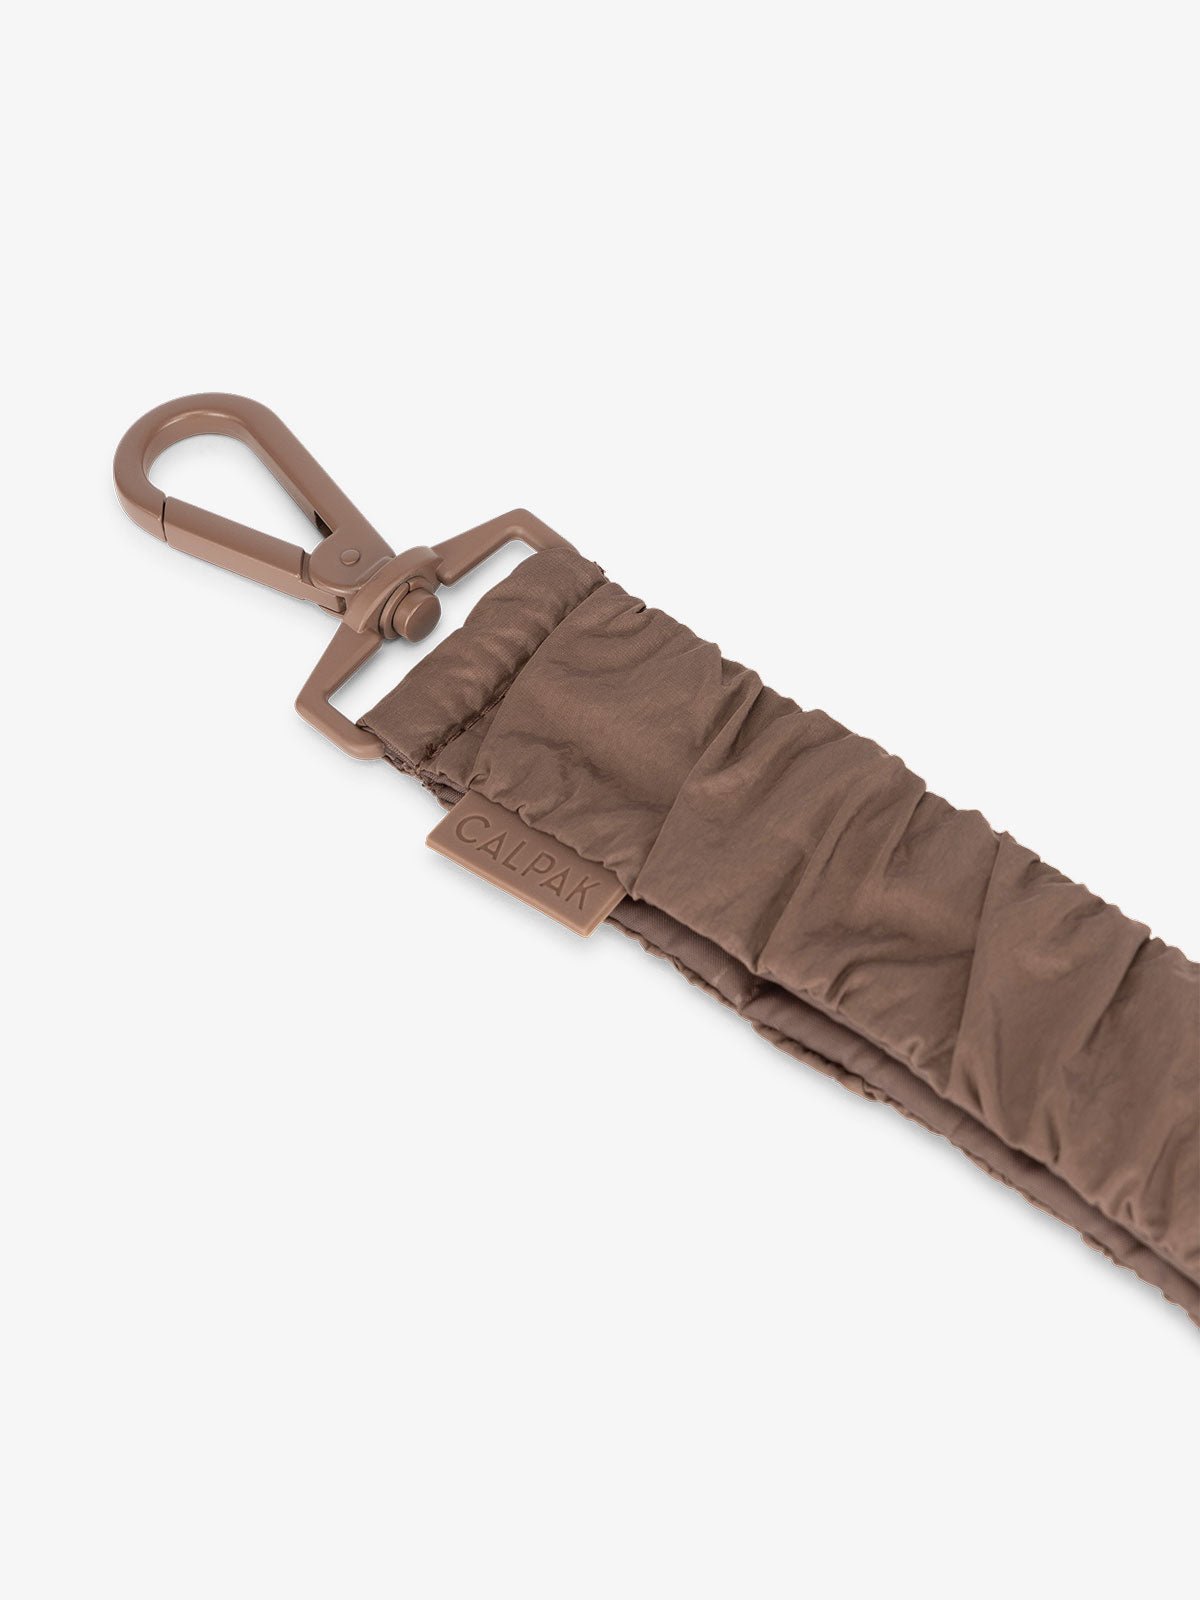 CALPAK diaper bag stroller straps with dog clips for d-rings in brown hazelnut